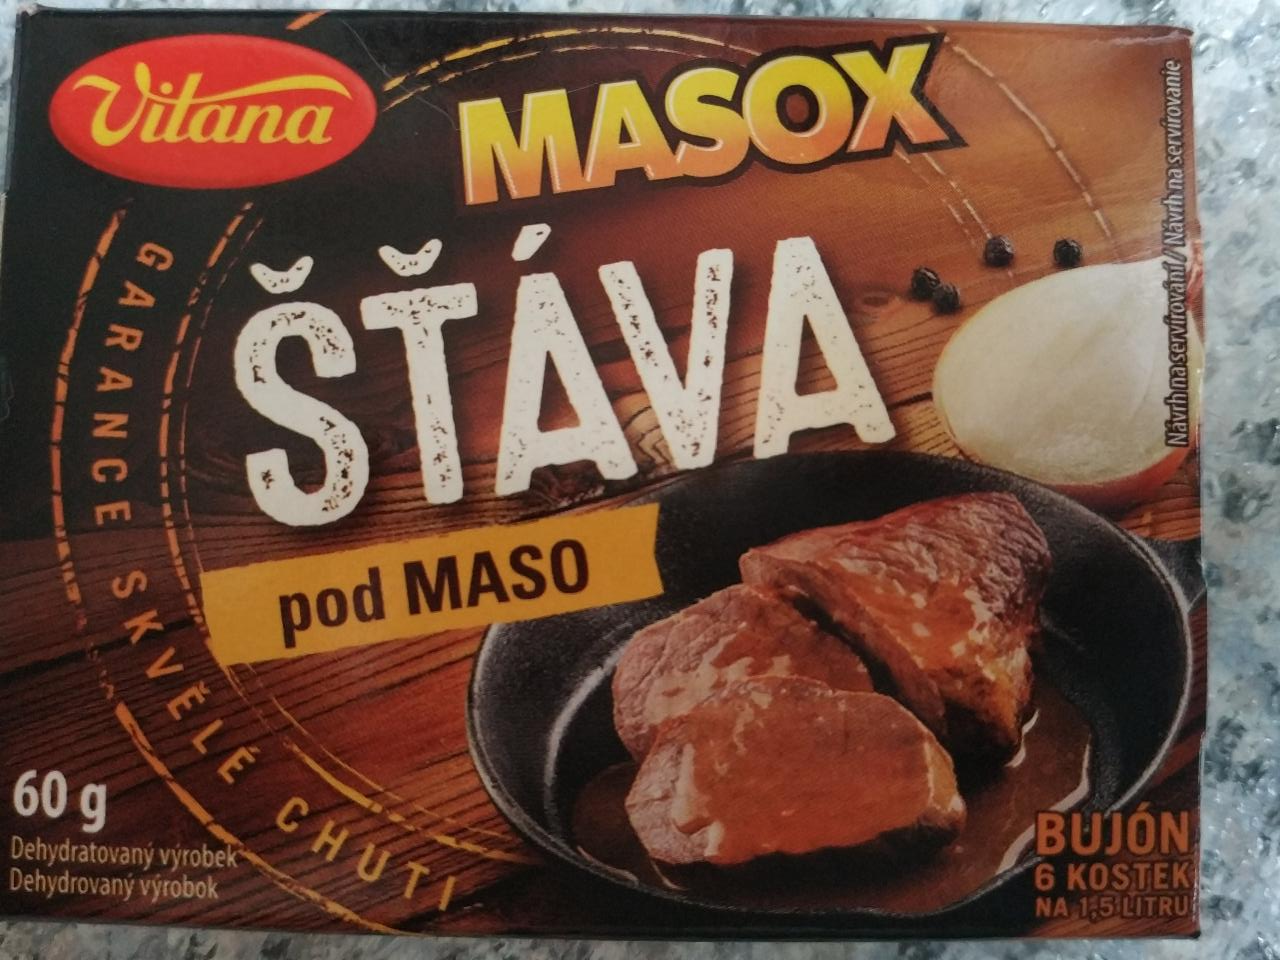 Fotografie - Masox šťáva pod maso Vitana